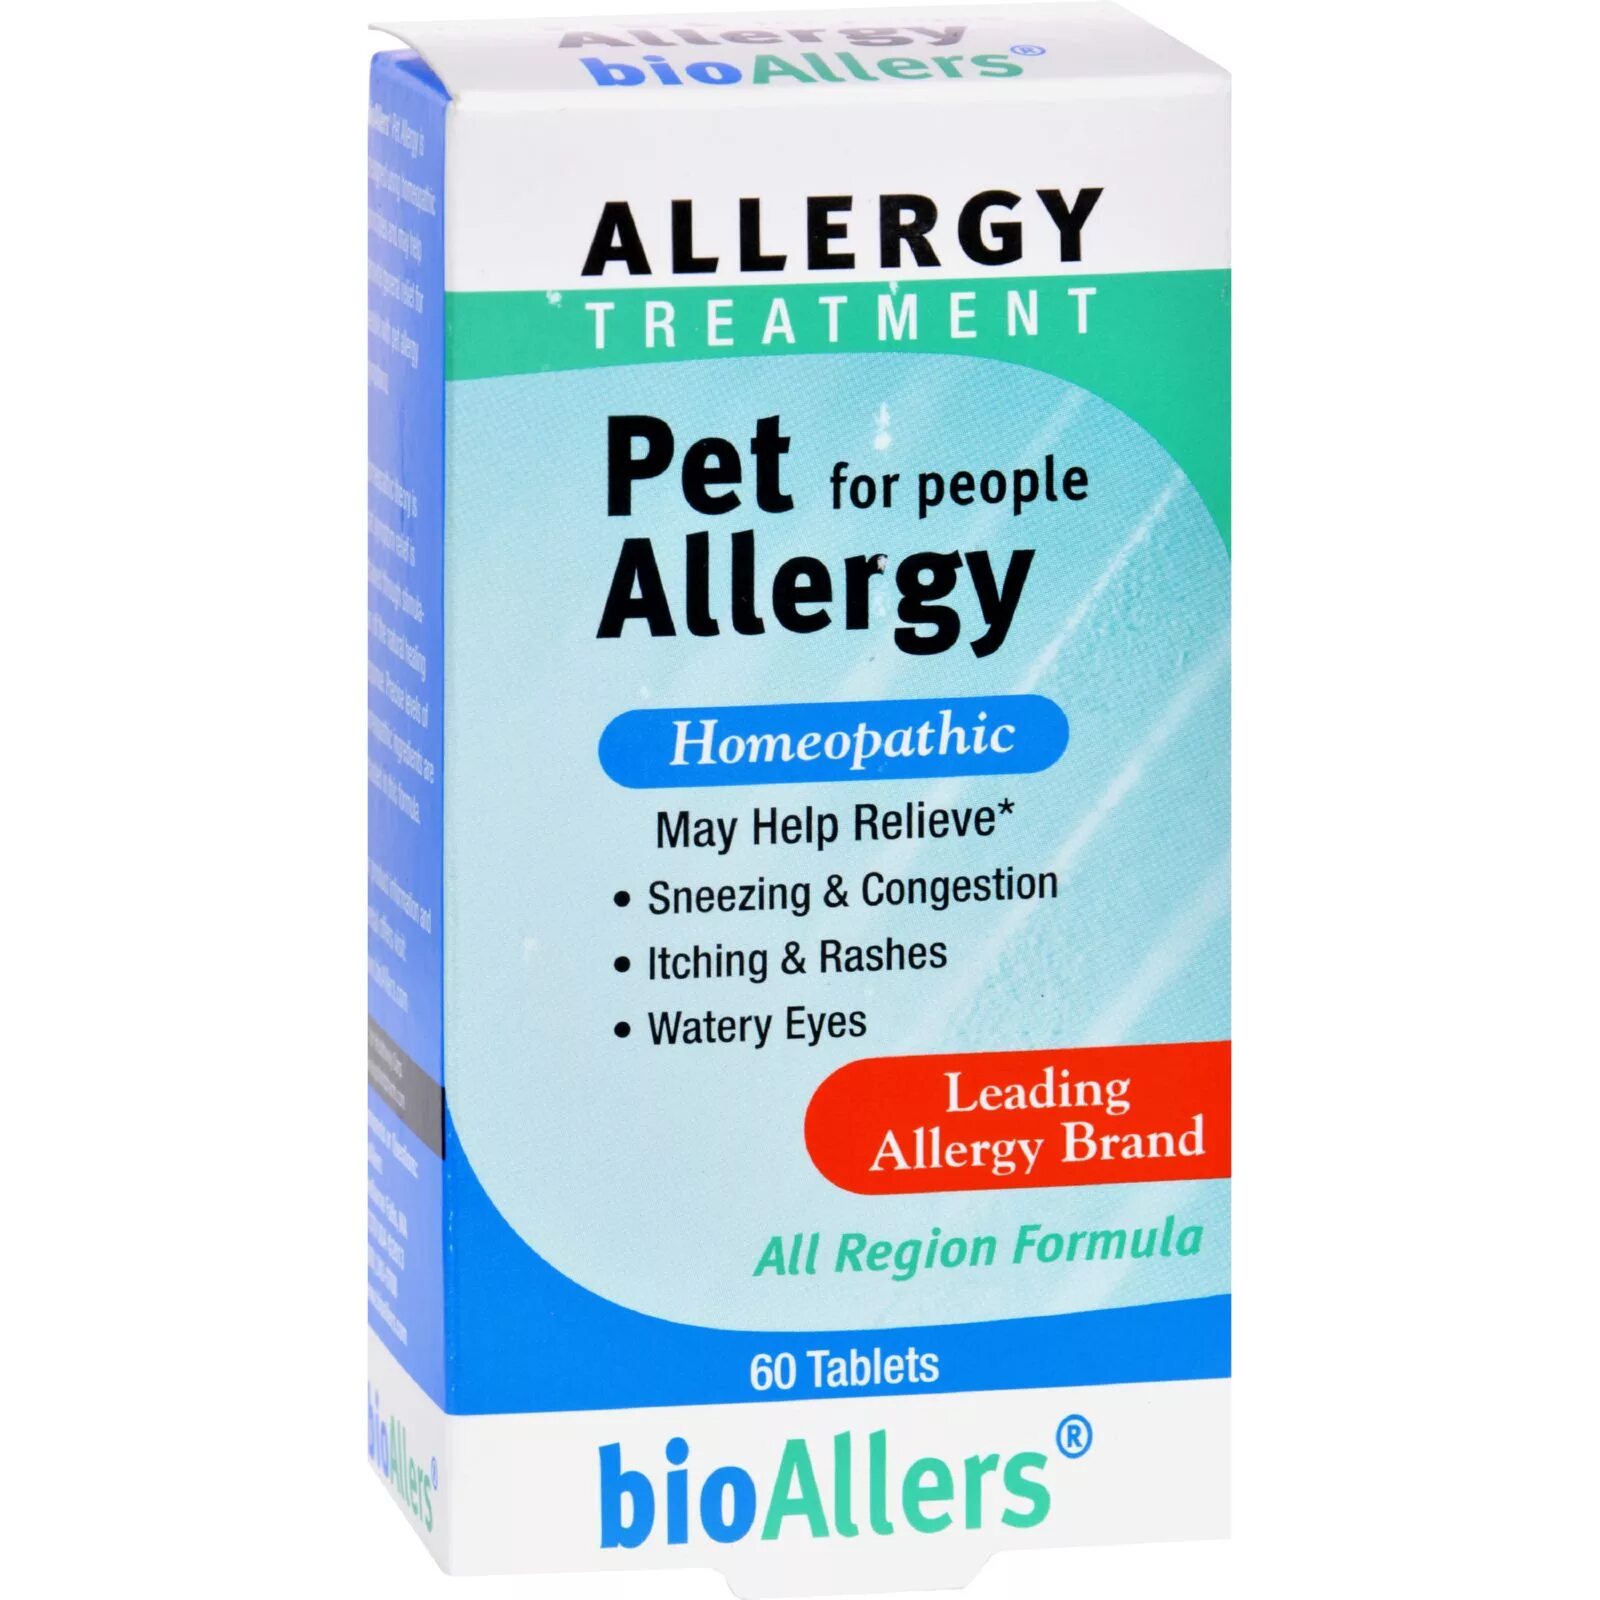 Tablets for Allergy в порошке. Allergy таблетки. Outdoor Allergy. Аллержи таблетки от аллергии.